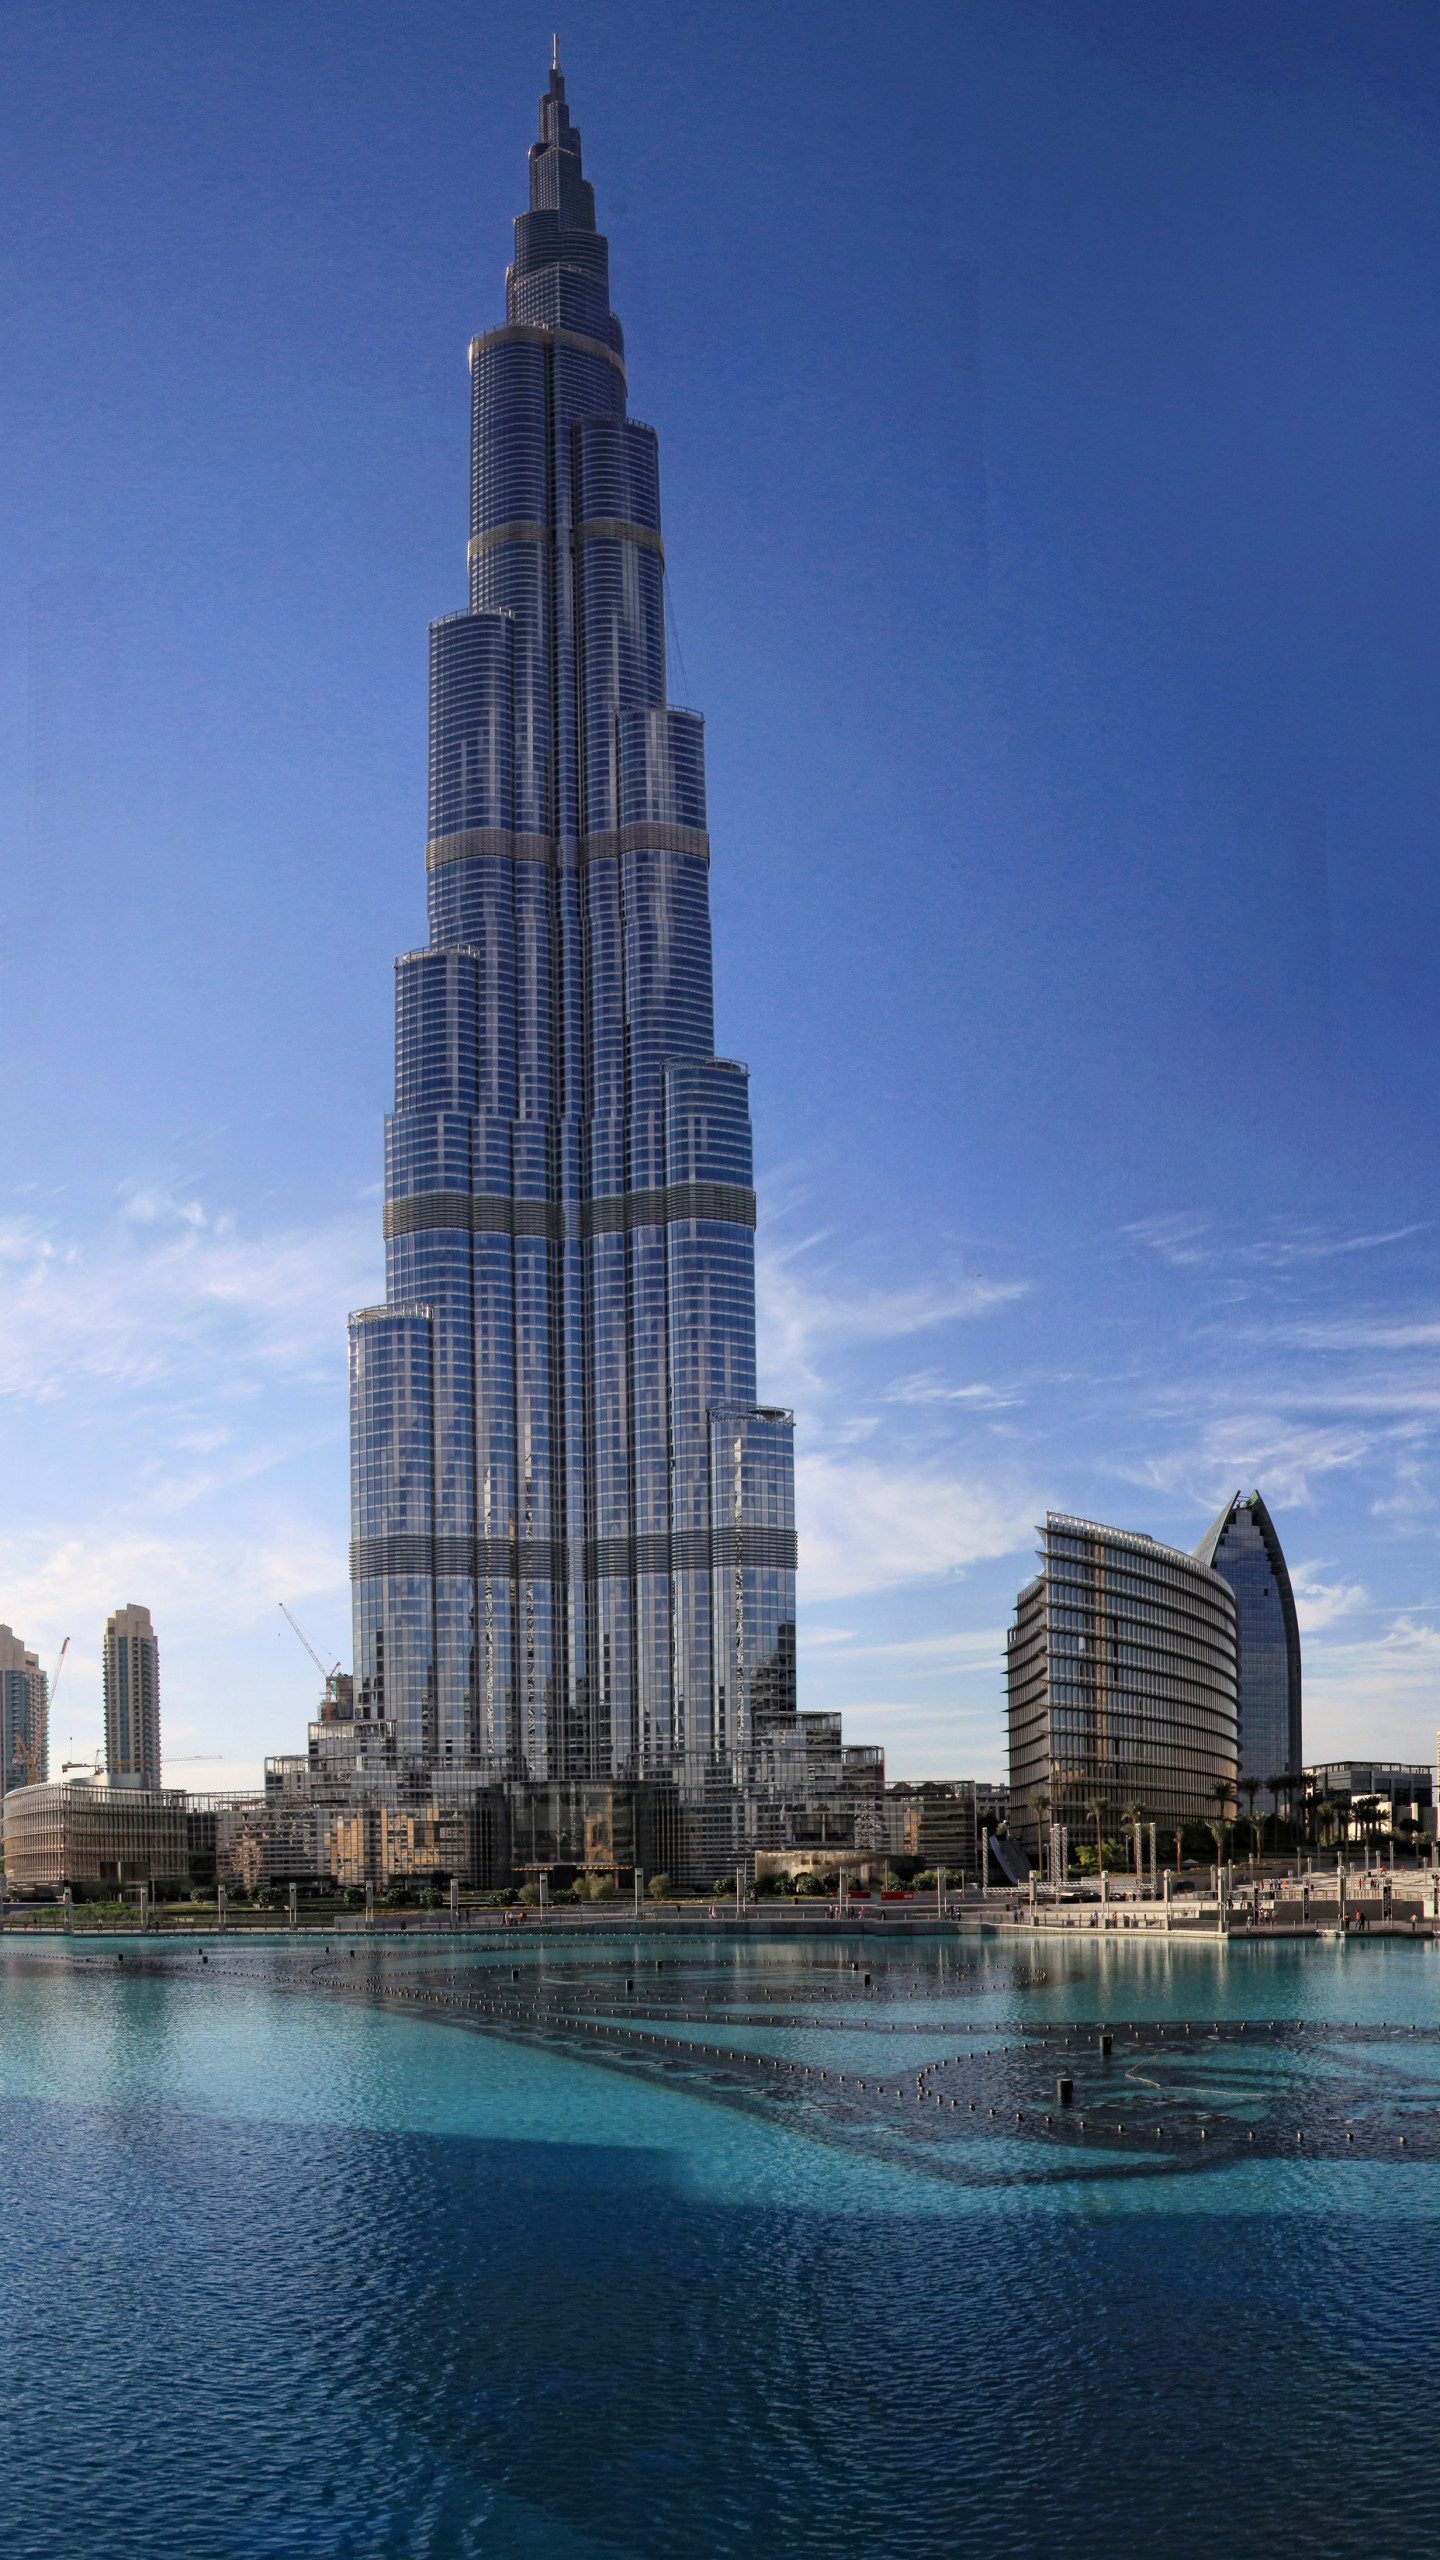 Dubai Burj Khalifa Night View Mobile Phone Wallpaper Stock Photo  Image  of blue east 104068524